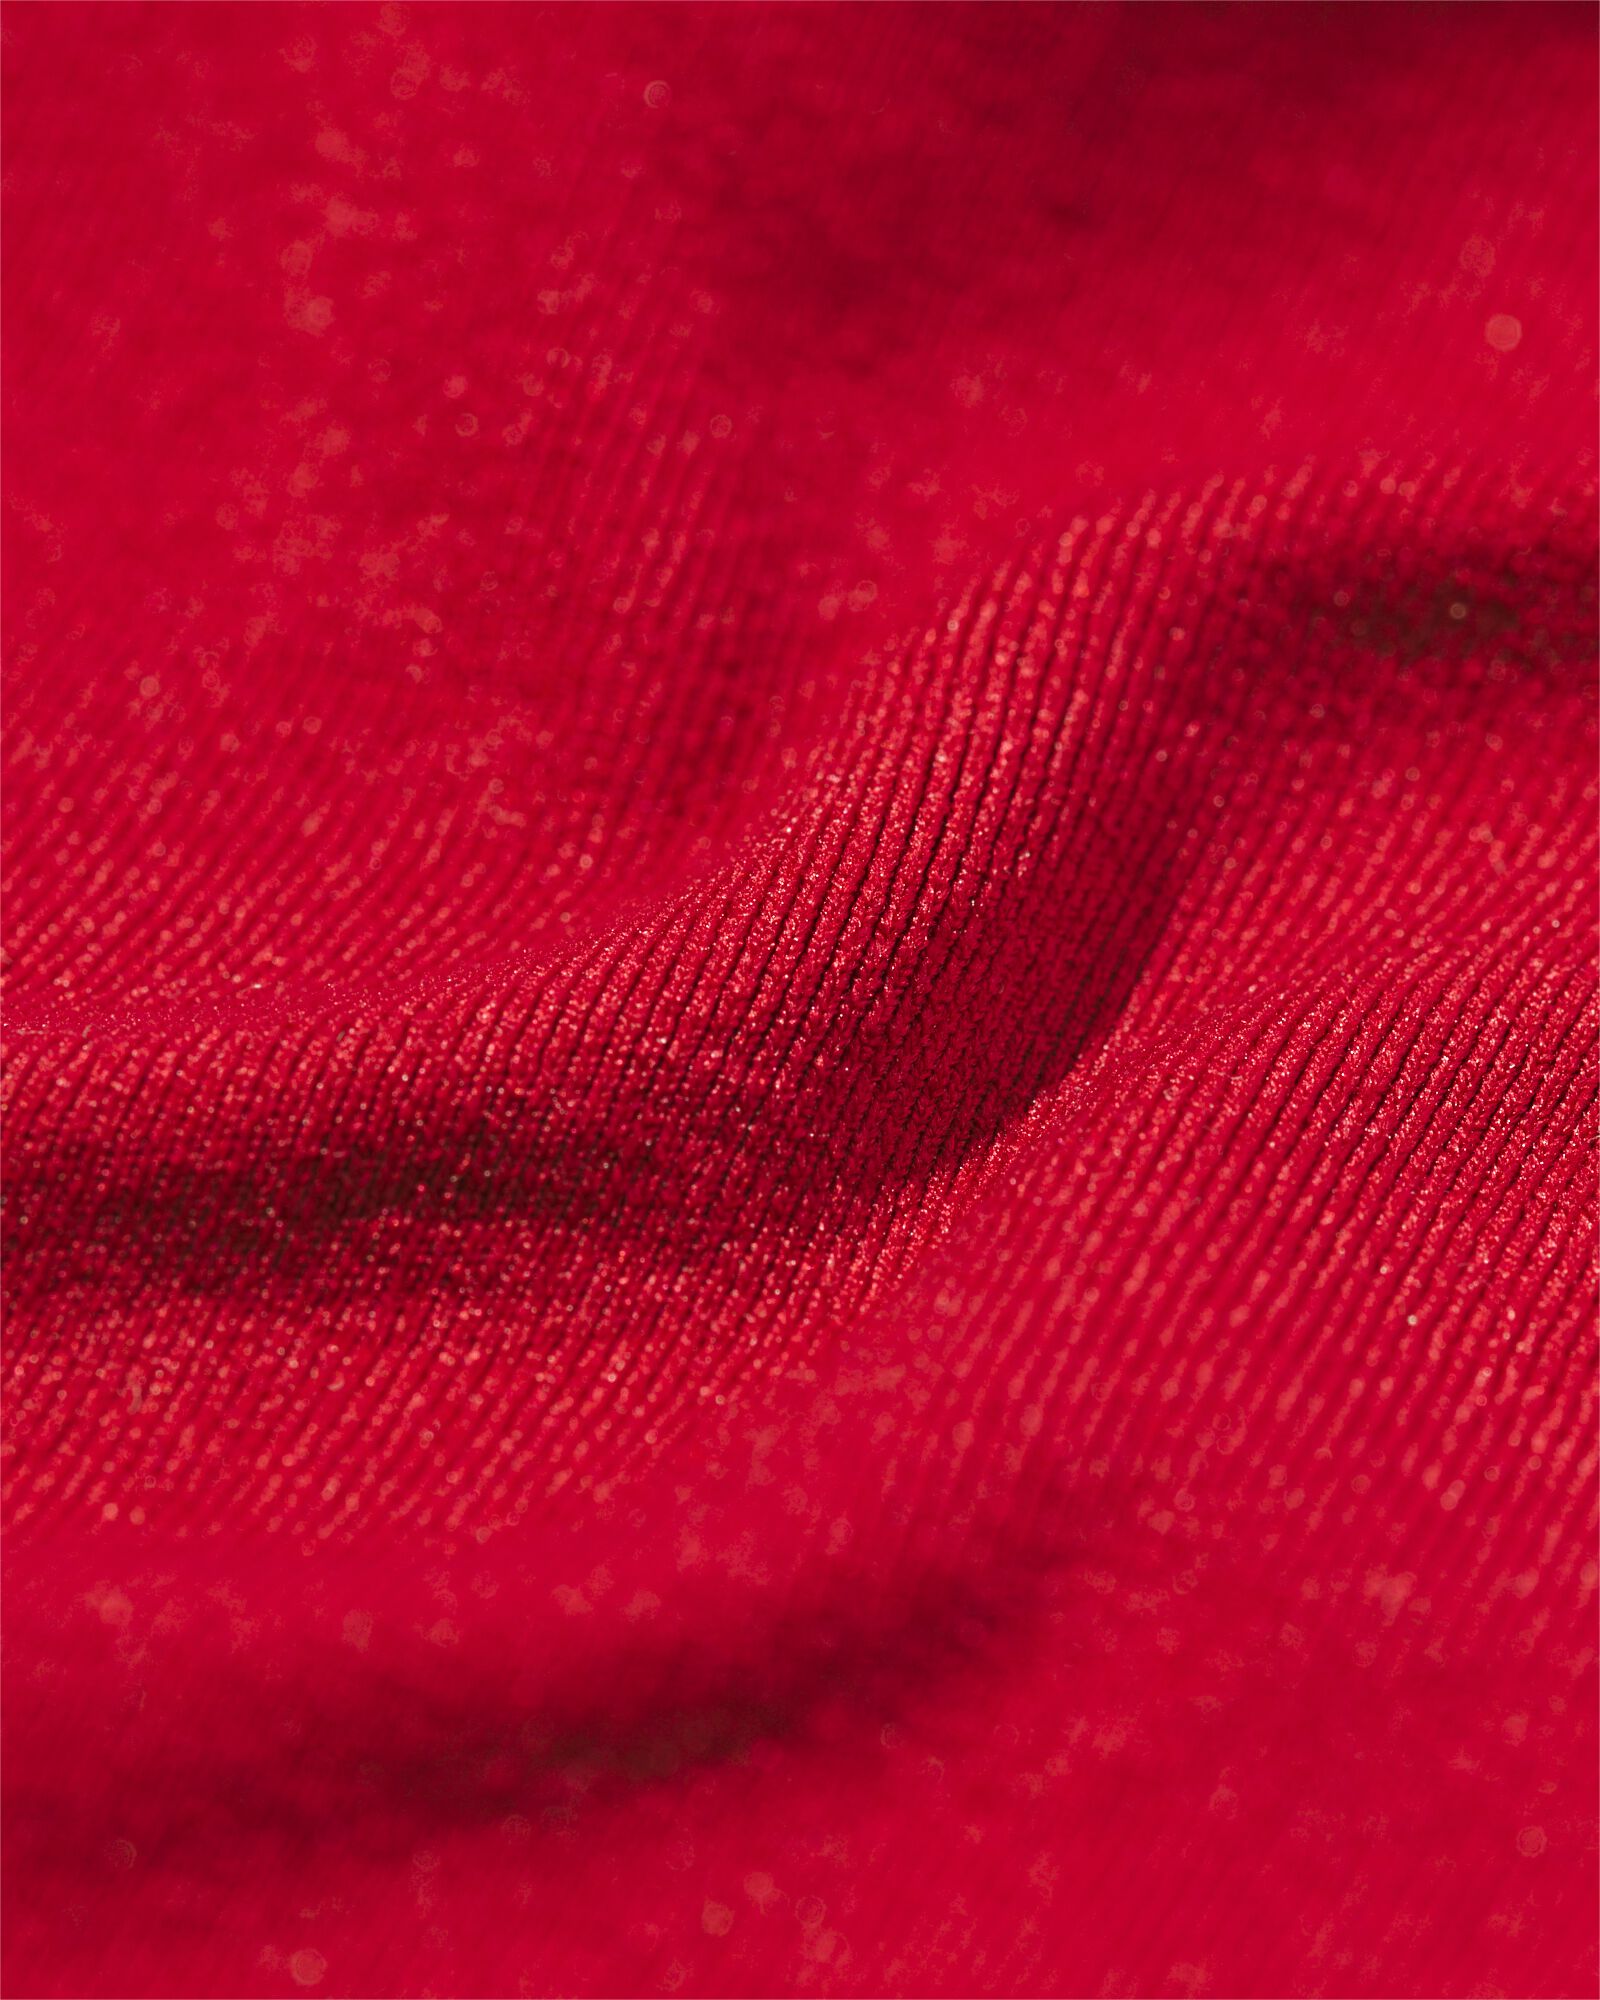 shortie femme sans coutures en micro rouge rouge - 19630355RED - HEMA